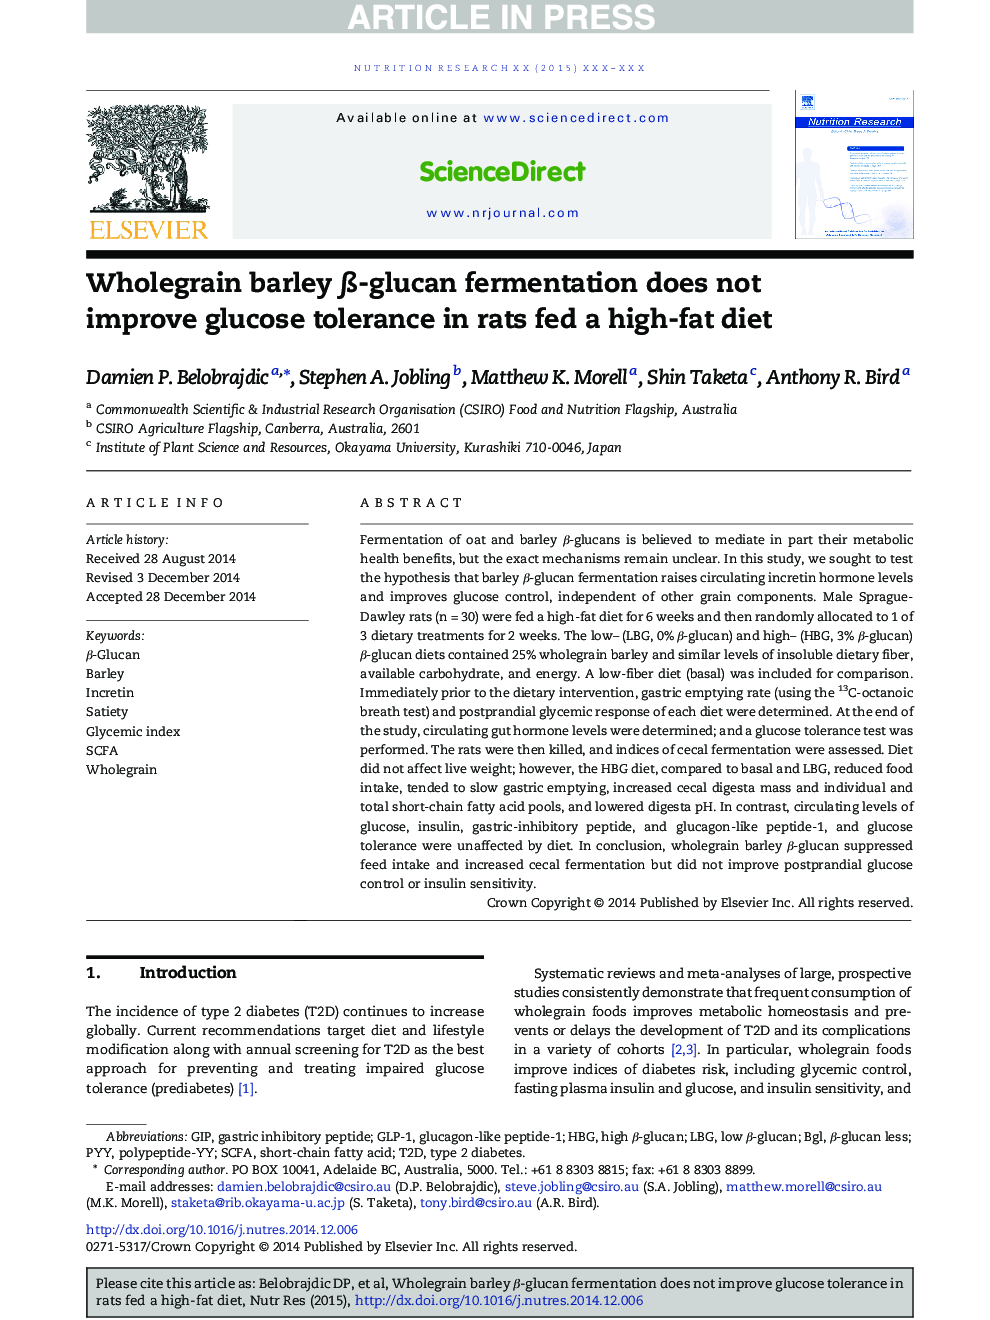 Wholegrain barley Î²-glucan fermentation does not improve glucose tolerance in rats fed a high-fat diet